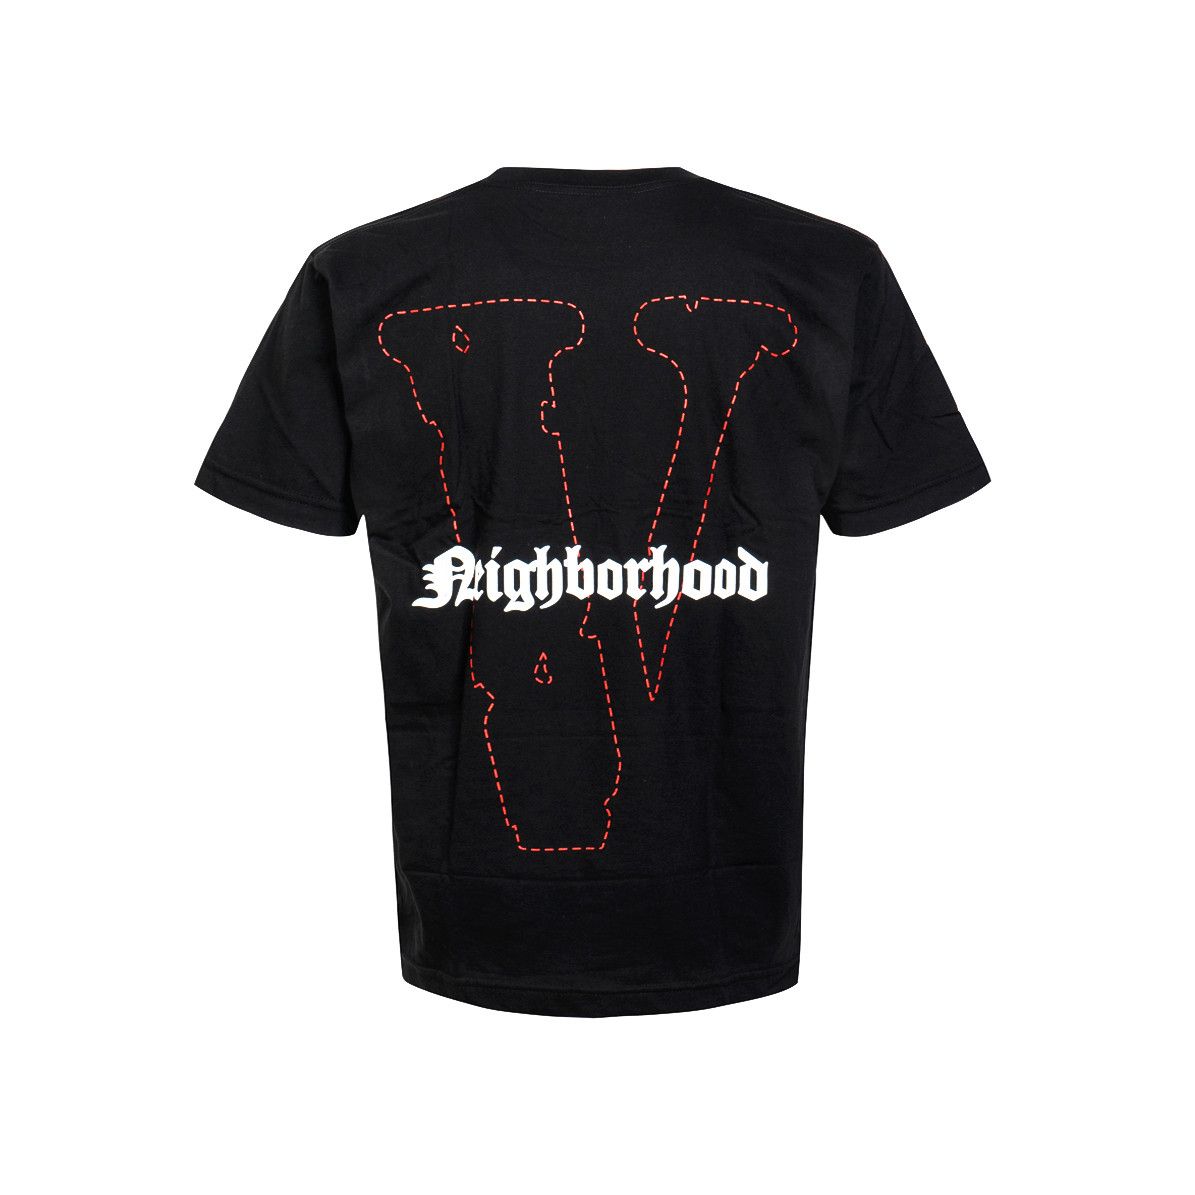 Vlone Vlone x Neighborhood Skull Black/Red T Shirt Size S